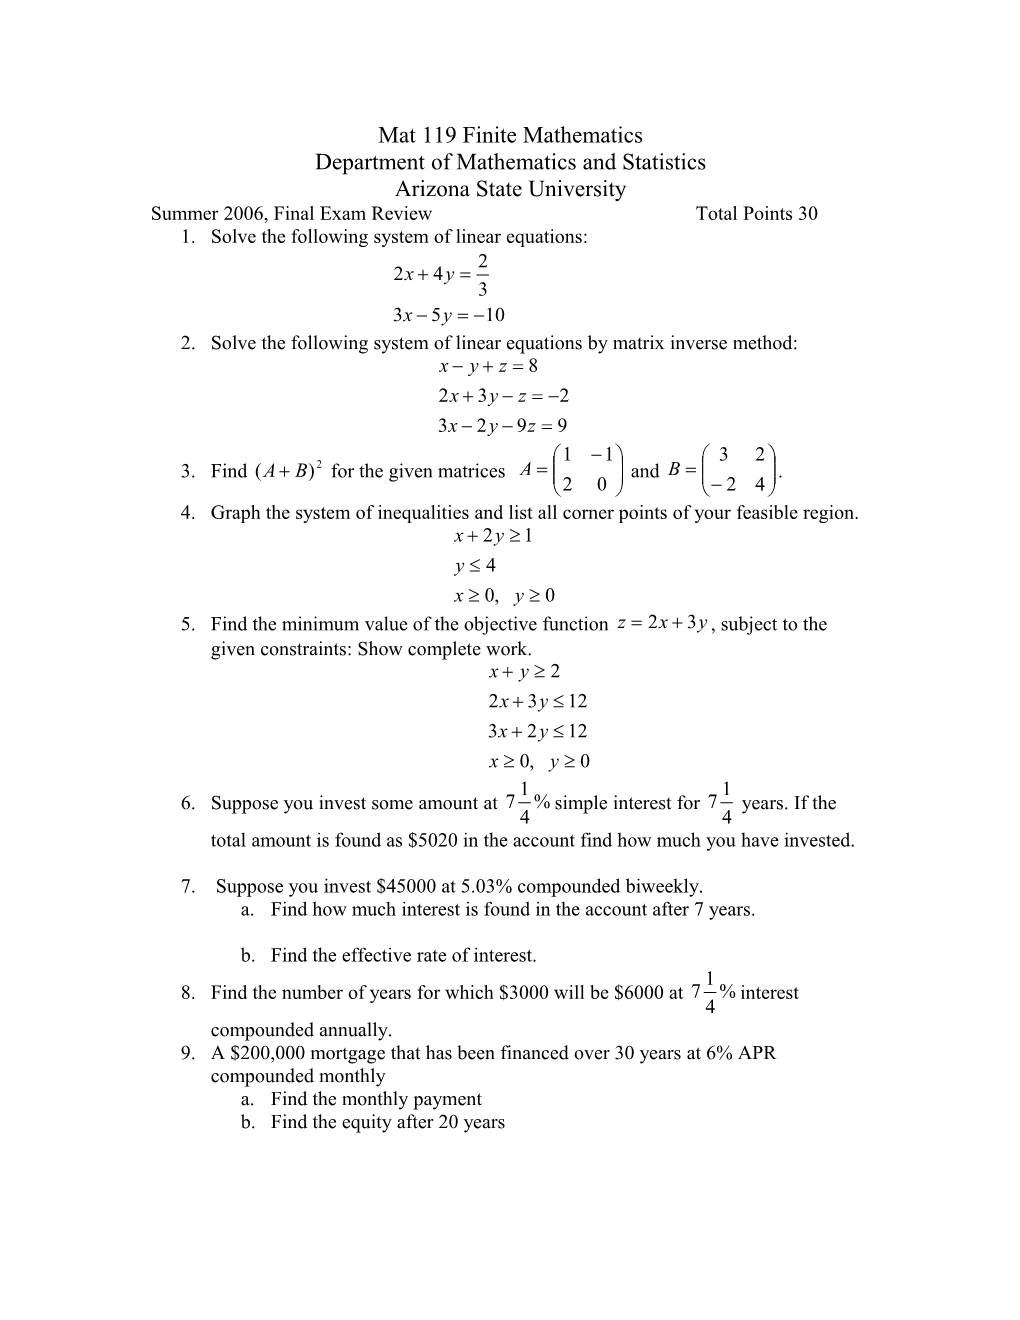 Mat 275 Modern Differential Equations